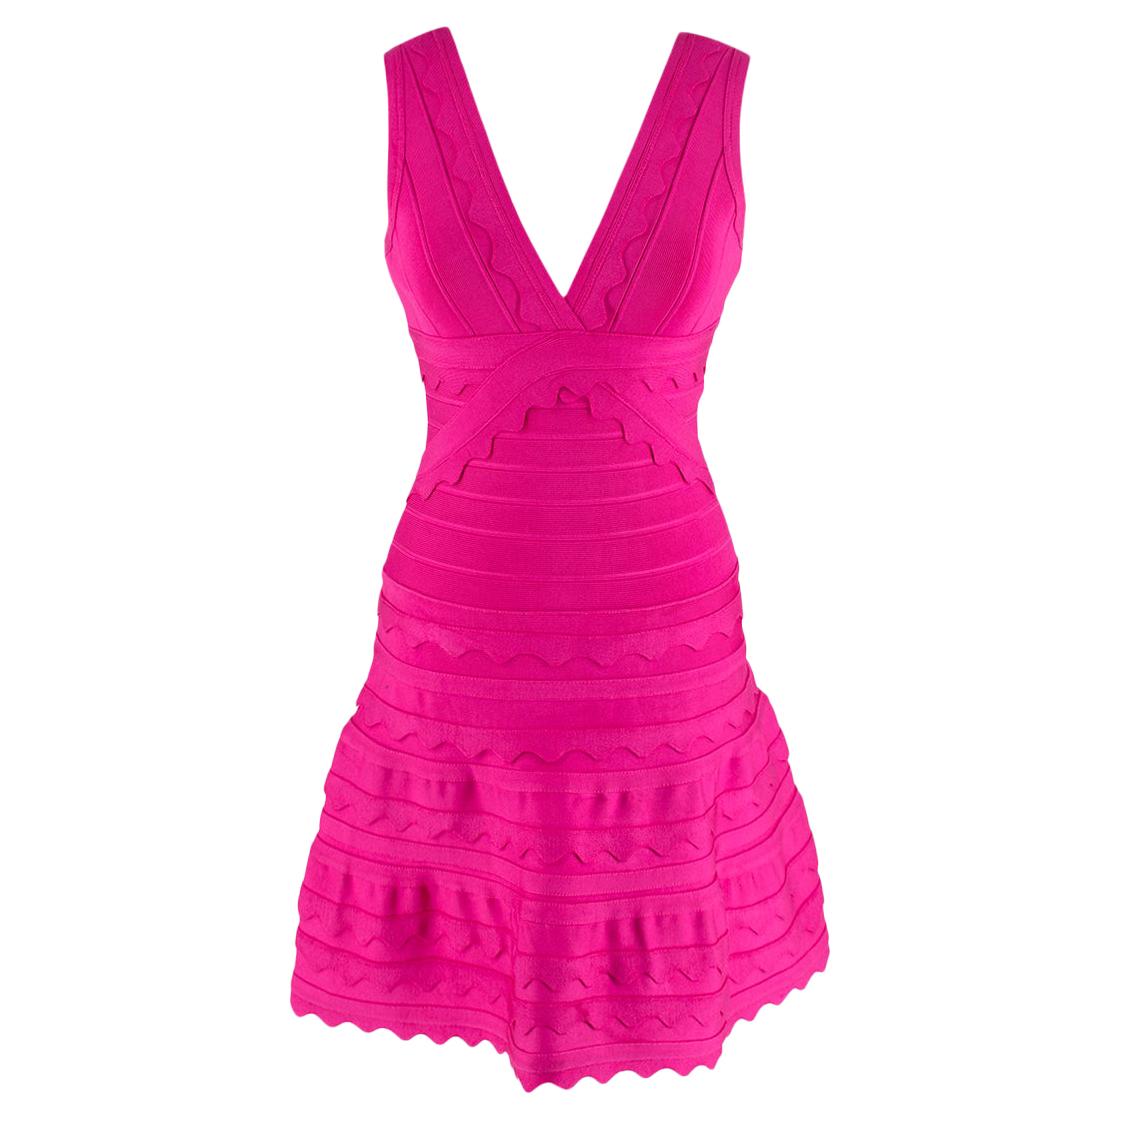 Herve Leger Nikayla Scalloped Edge Caprice Pink Dress  - Us size 6 For Sale